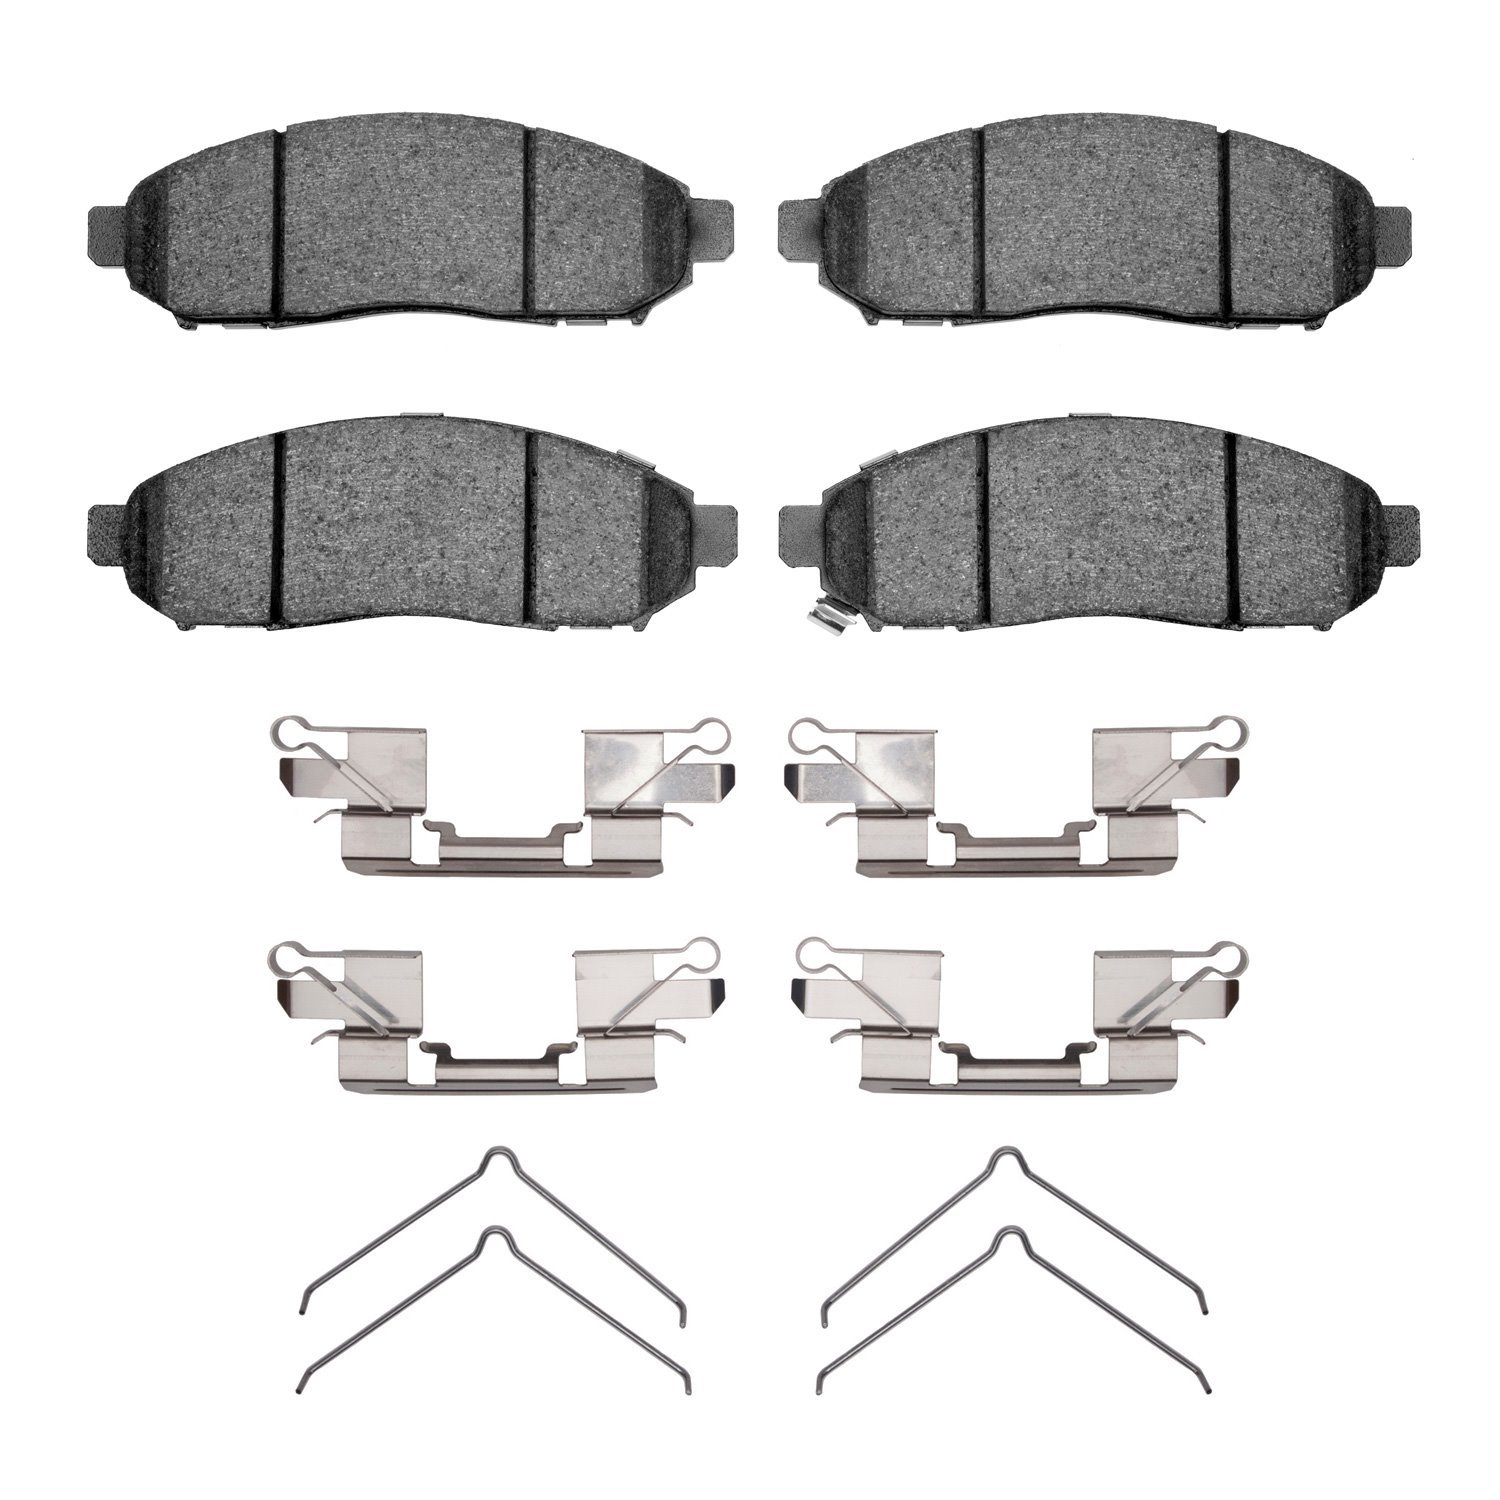 1310-1094-01 3000-Series Ceramic Brake Pads & Hardware Kit, Fits Select Multiple Makes/Models, Position: Front